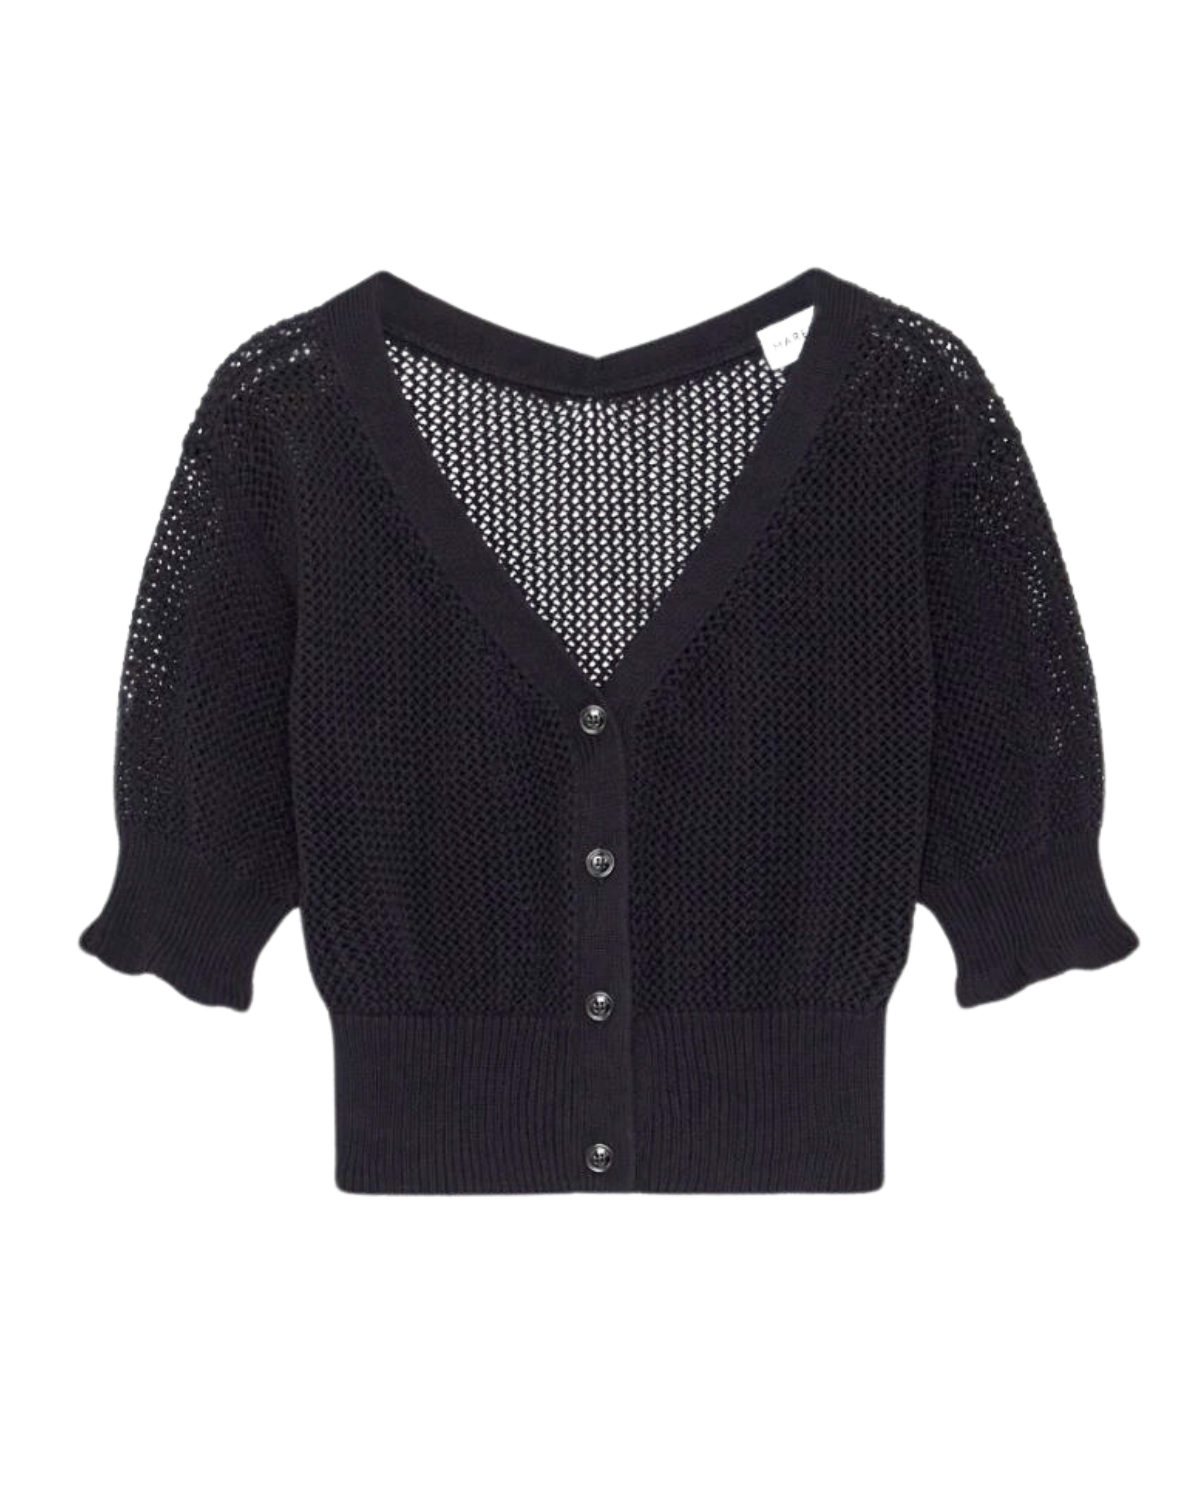 Cotton 1/2 Sleeve Crochet Cardigan (Black)